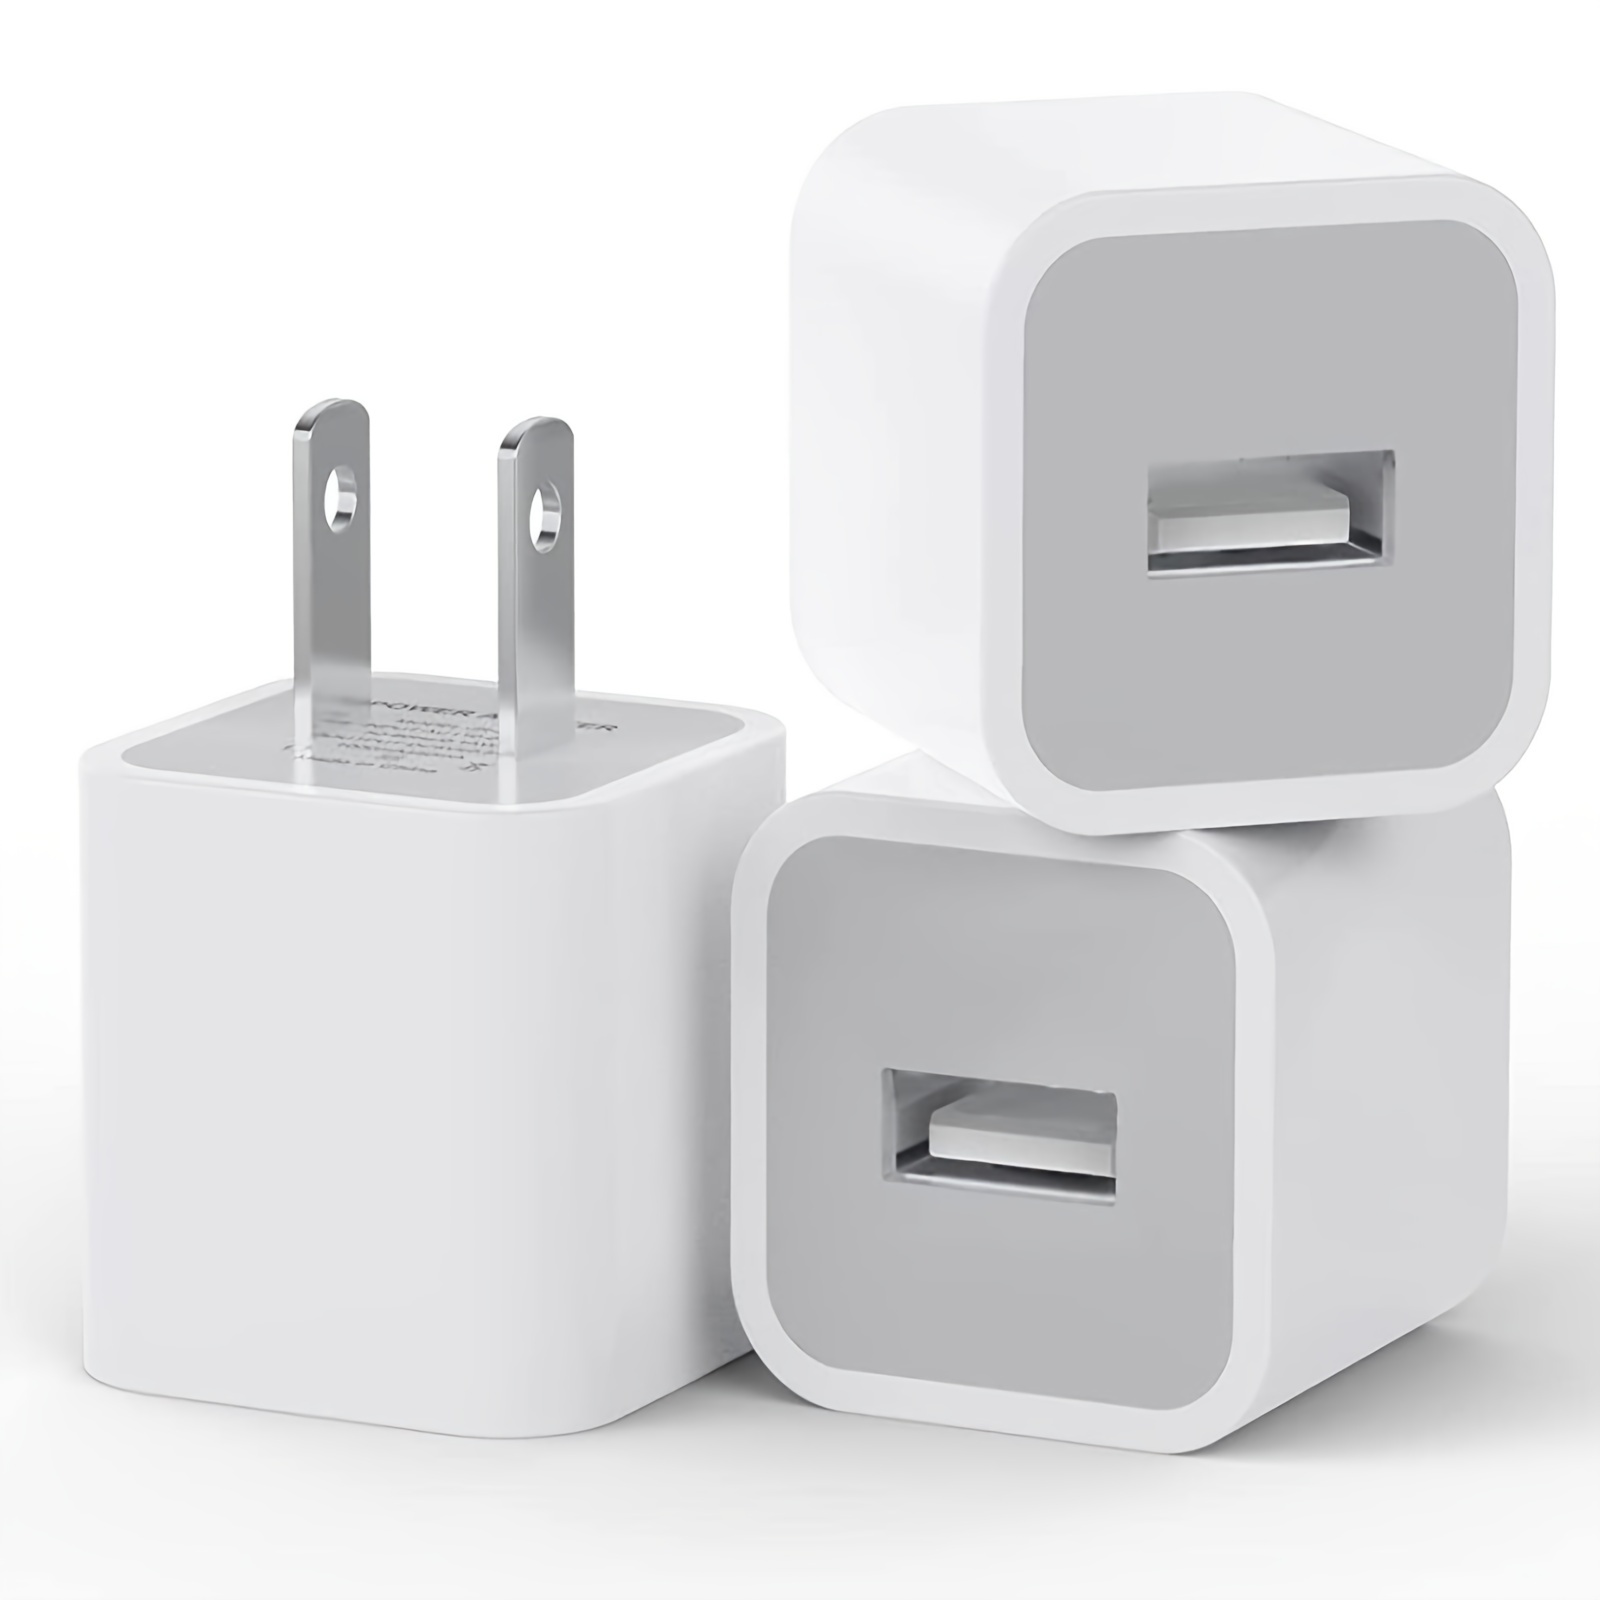  Enchufe USB, cargador de pared USB, paquete de 3 unidades,  GiGreen de doble puerto USB enchufe eléctrico cubo 5V 2.1A bloque de carga  USB enchufes compatibles iPhone 11 XS X 8